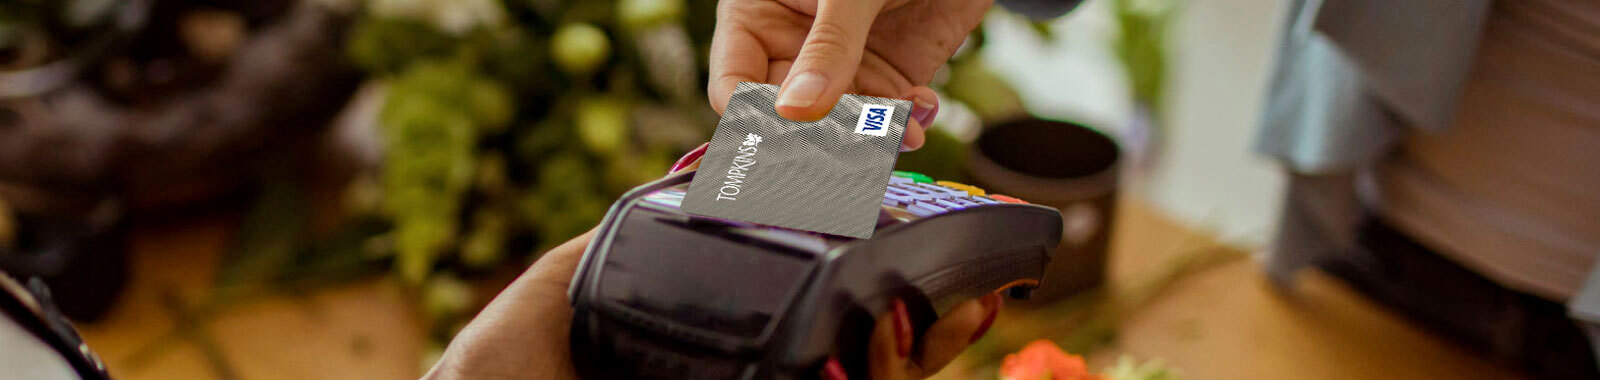 consumer credit card